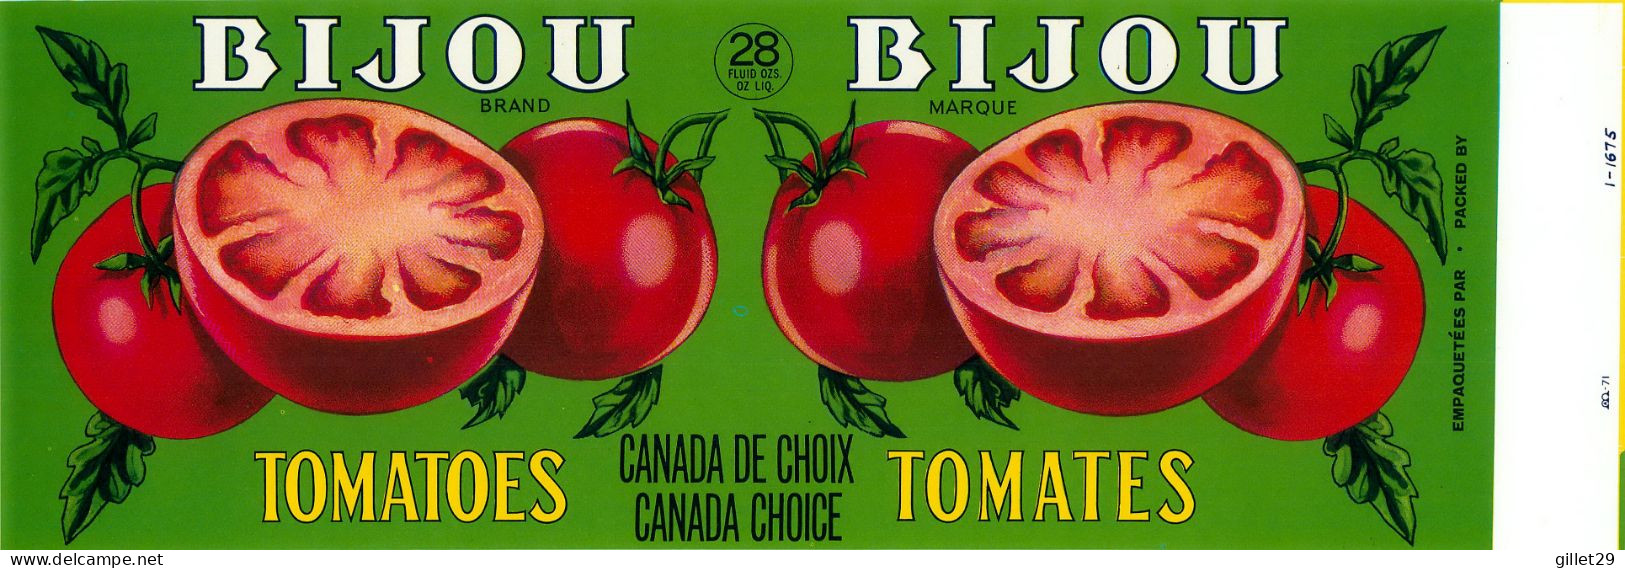 ÉTIQUETTES - BIJOU BRAND TOMATOES - BIJOU MARQUE TOMATES - - 28 OZS CANADA - DIMENSION 11 X 33 Cm - - Fruits & Vegetables